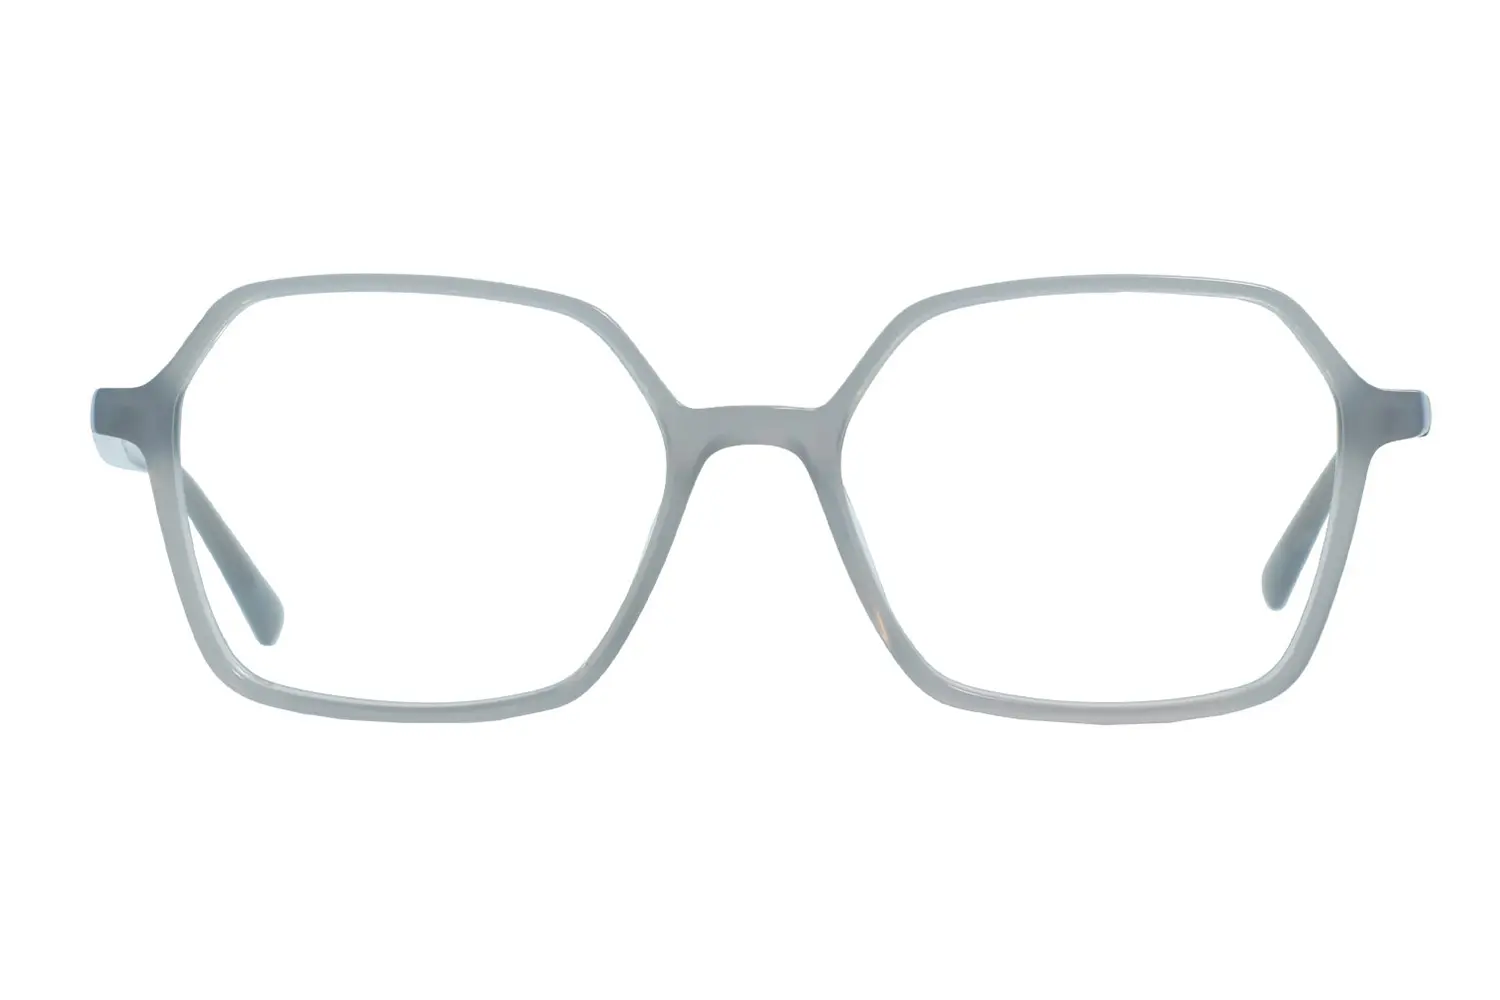 عینک طبی karen millen مدل HA65 C7 - دکترعینک